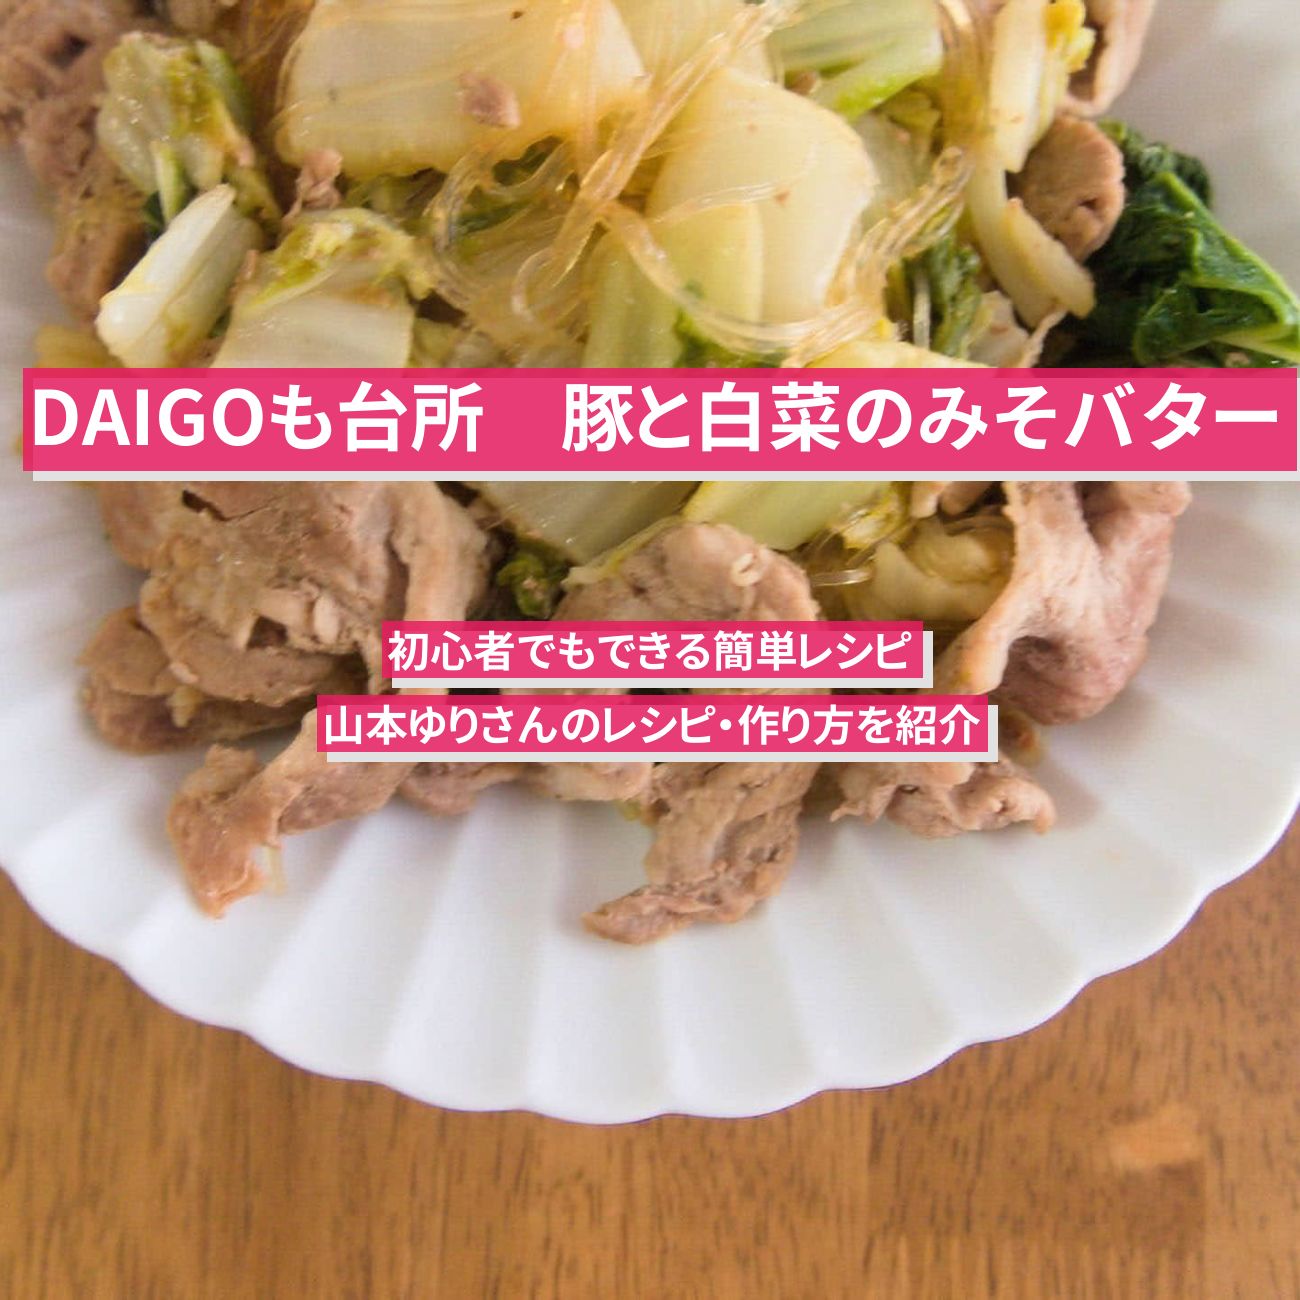 【DAIGOも台所】魔法のニンニク味噌バターで『豚と白菜のみそバター』山本ゆりさんのレシピ・作り方を紹介〔ダイゴも台所〕